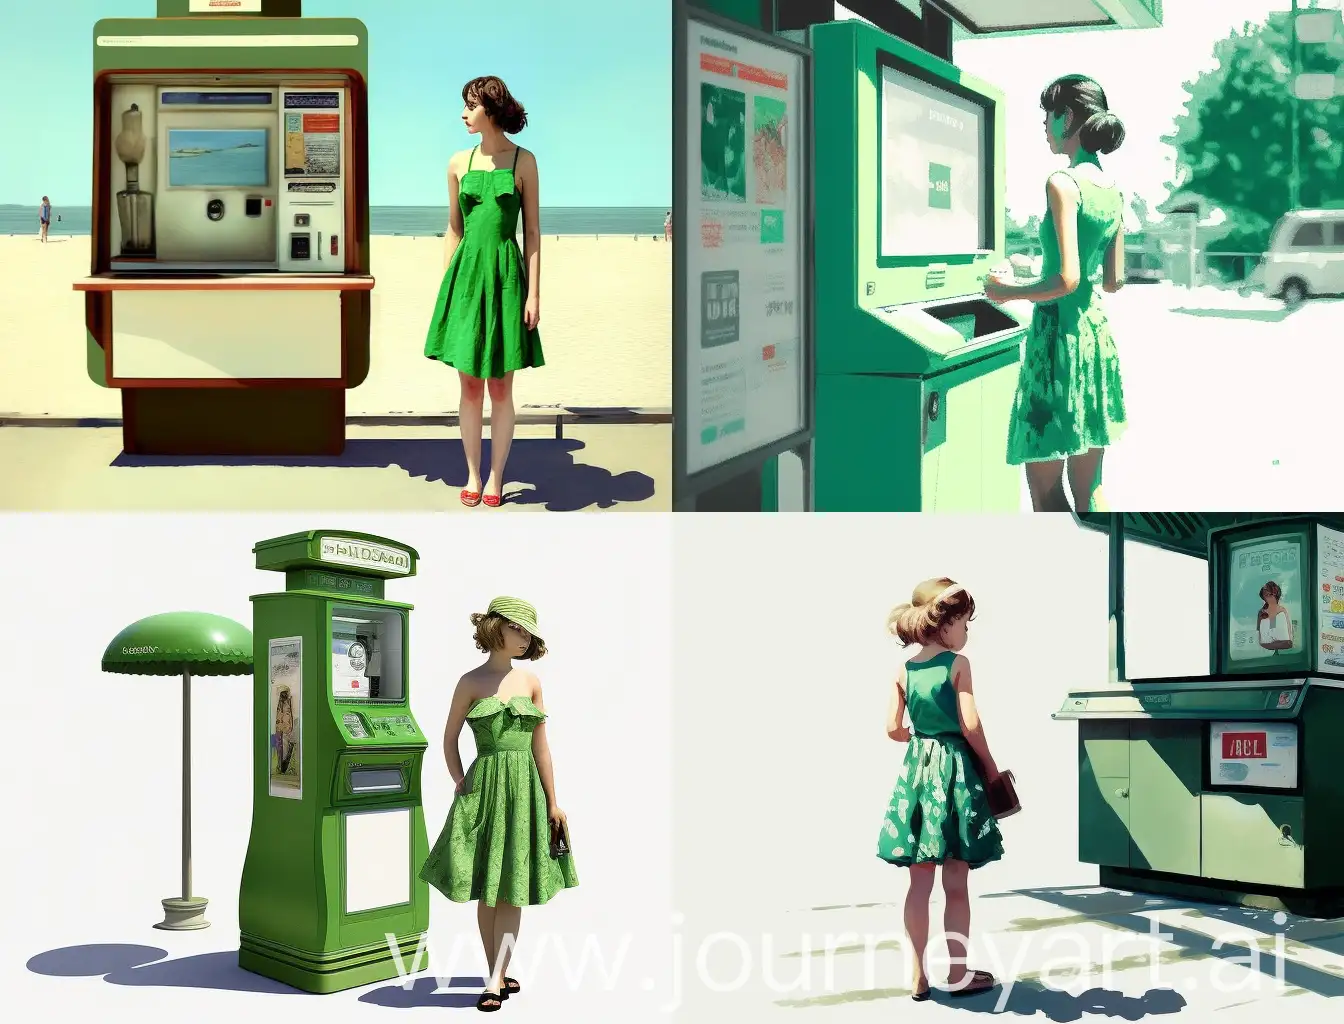 Girl-in-Green-Dress-at-Sunny-SelfService-Kiosk